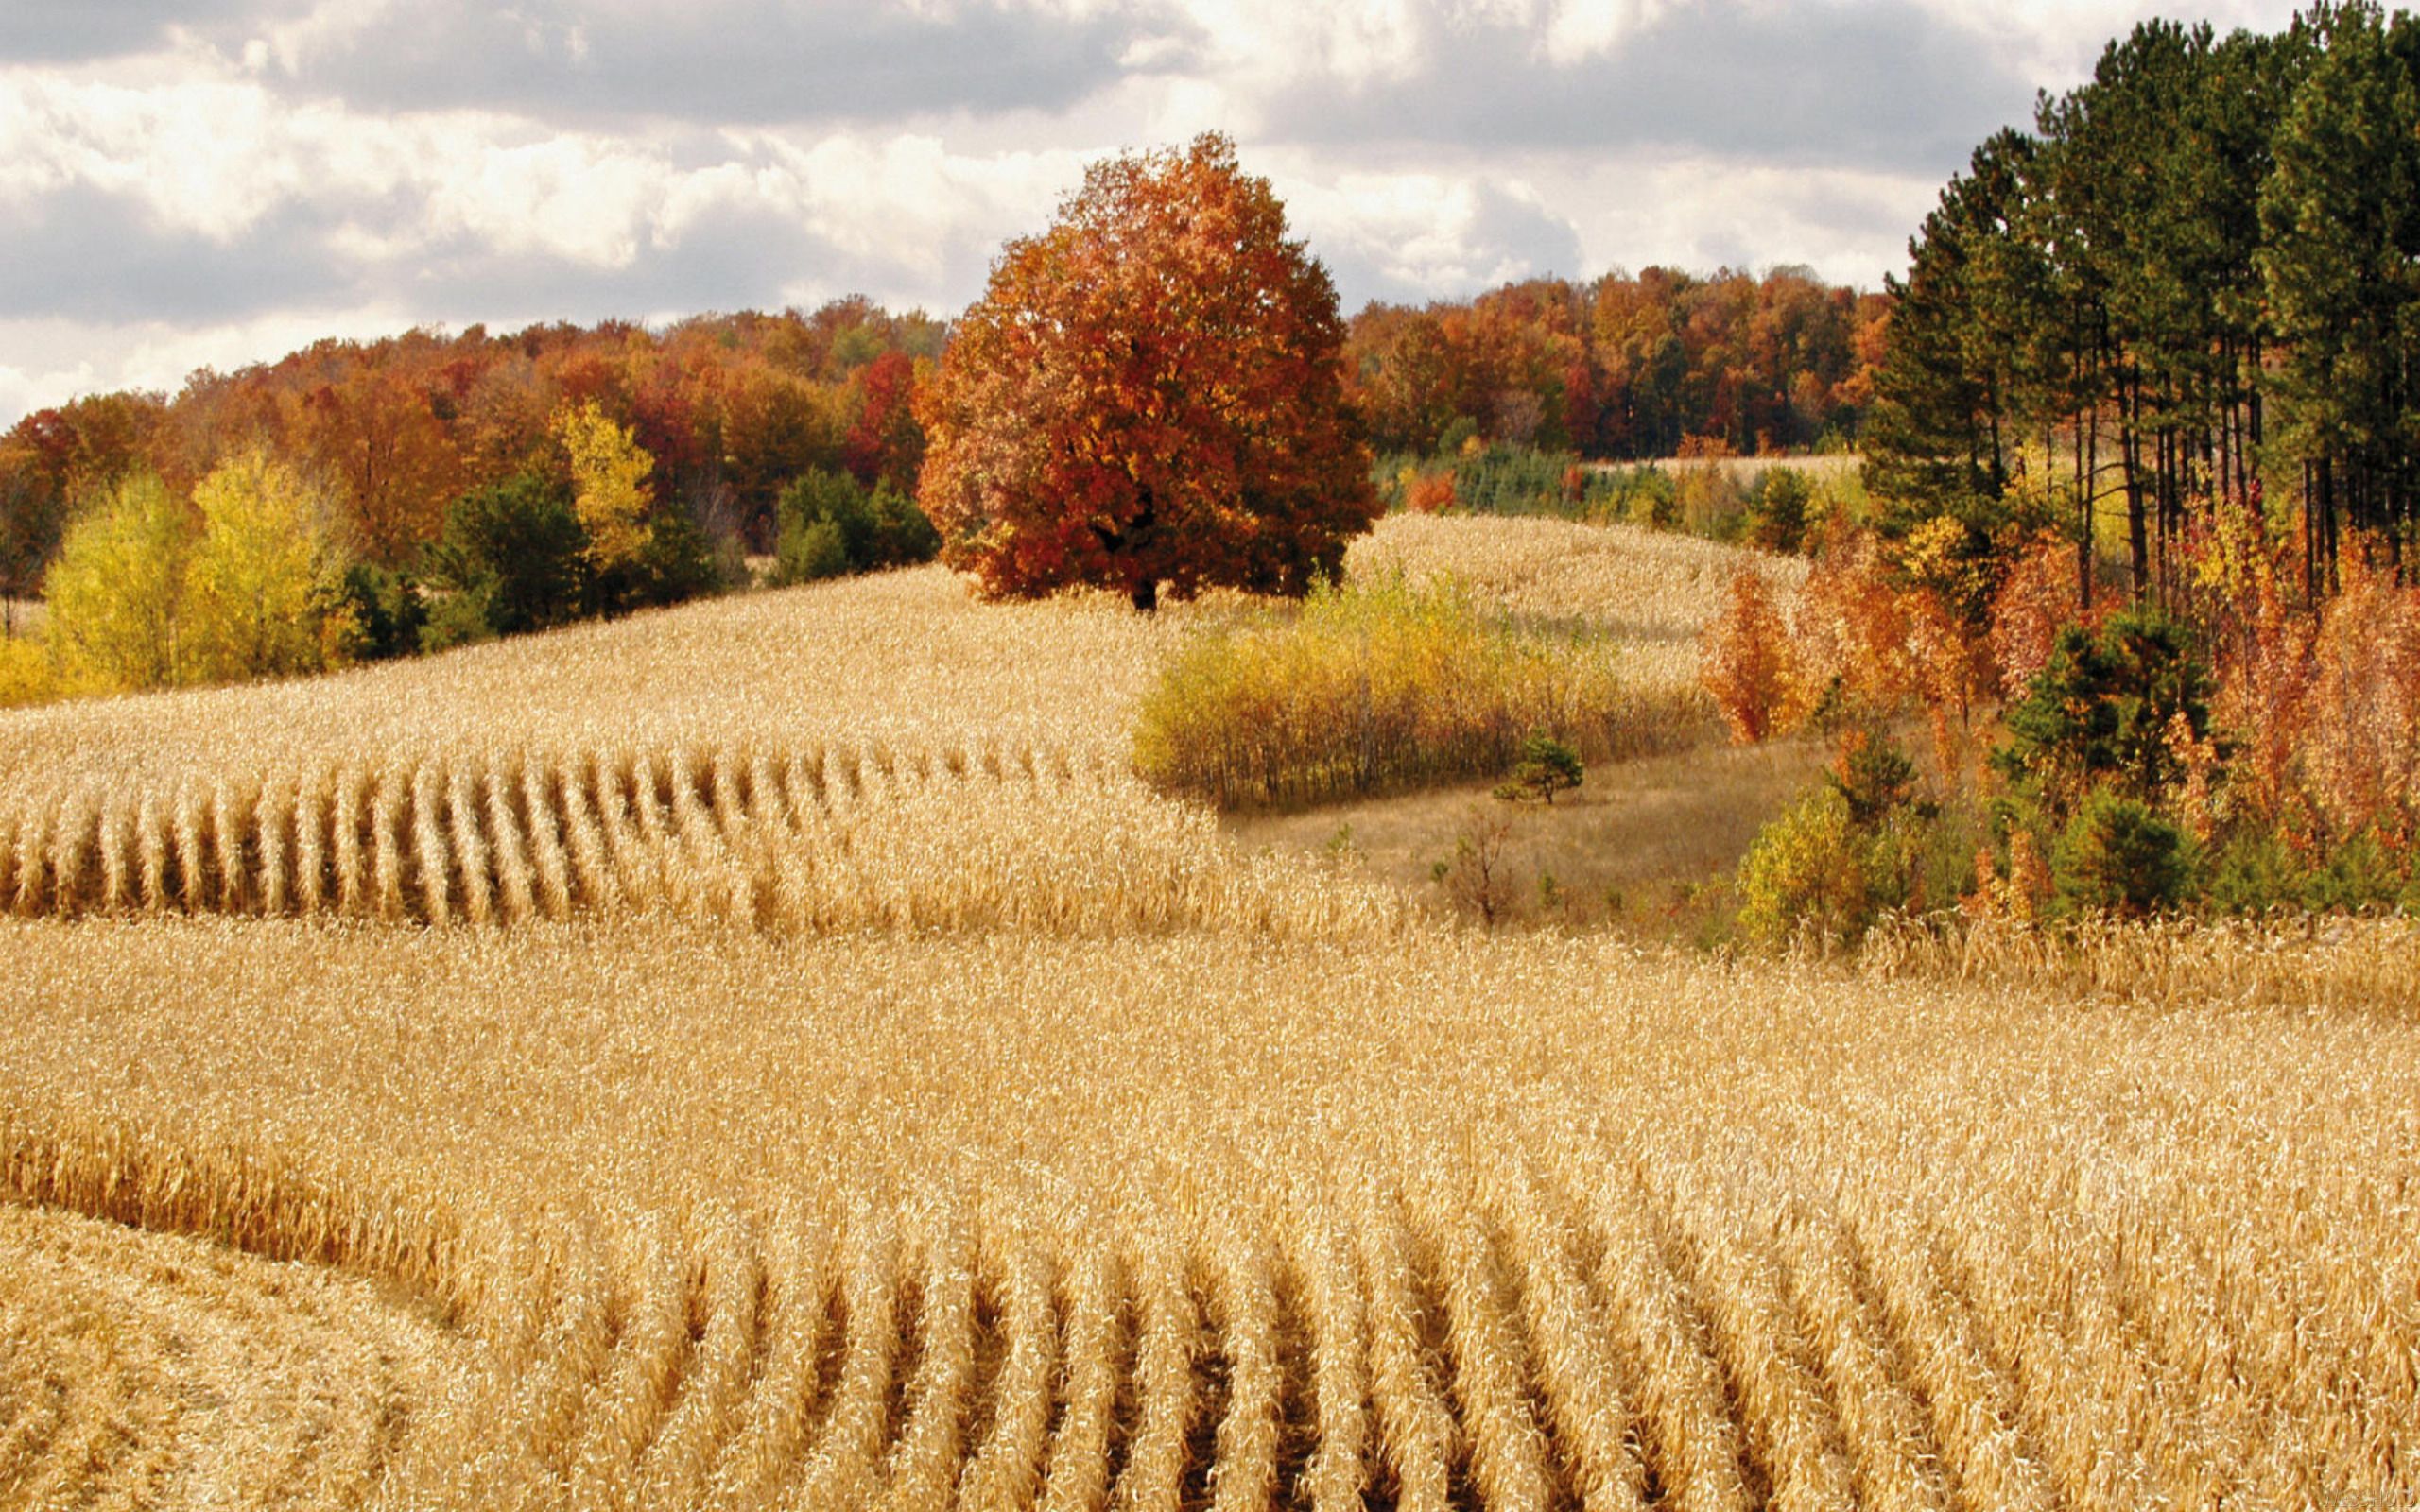 Wheat field. Autumn landscape, Landscape, Fall landscaping